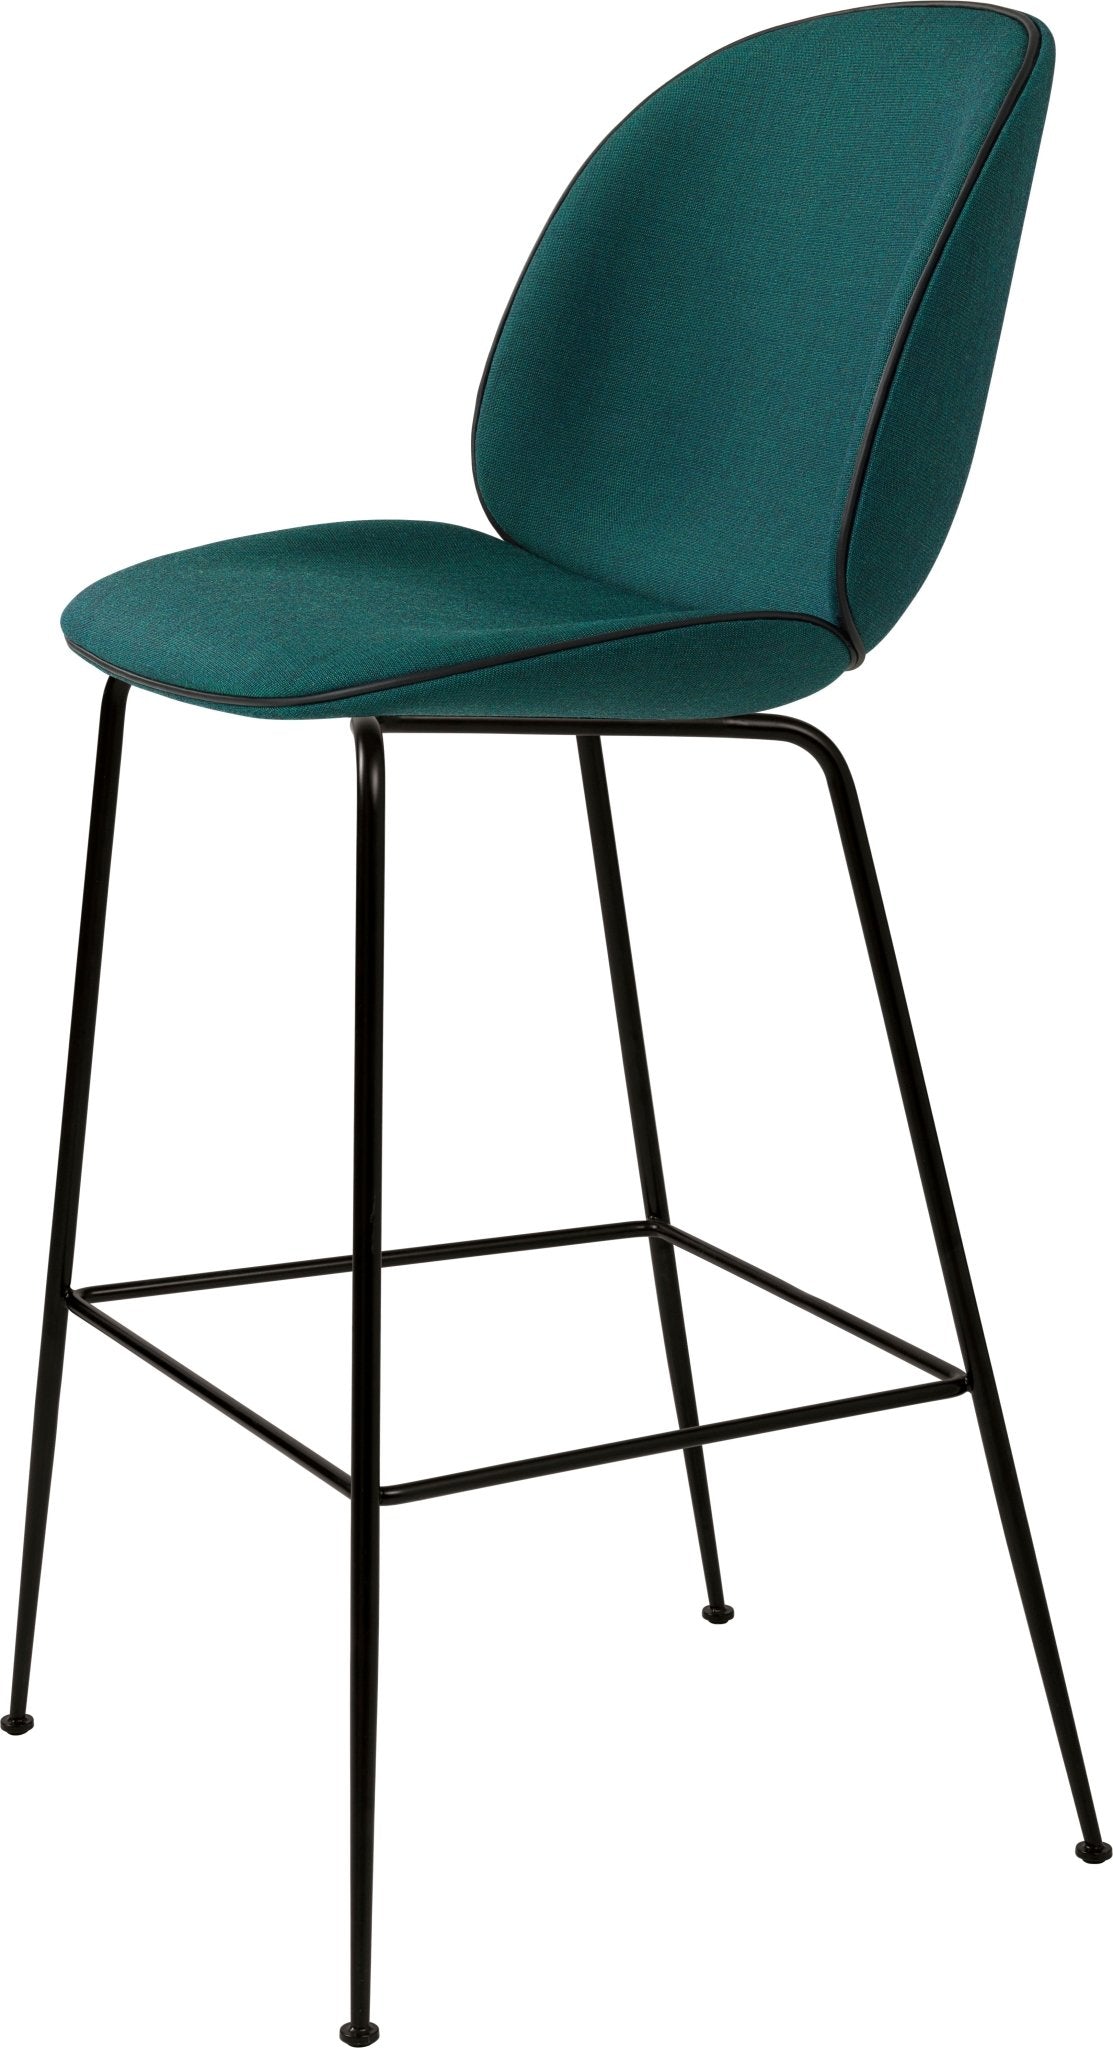 Beetle Bar Chair - Fully Upholstered - Black Chrome / Gabriel Tempt - 60152